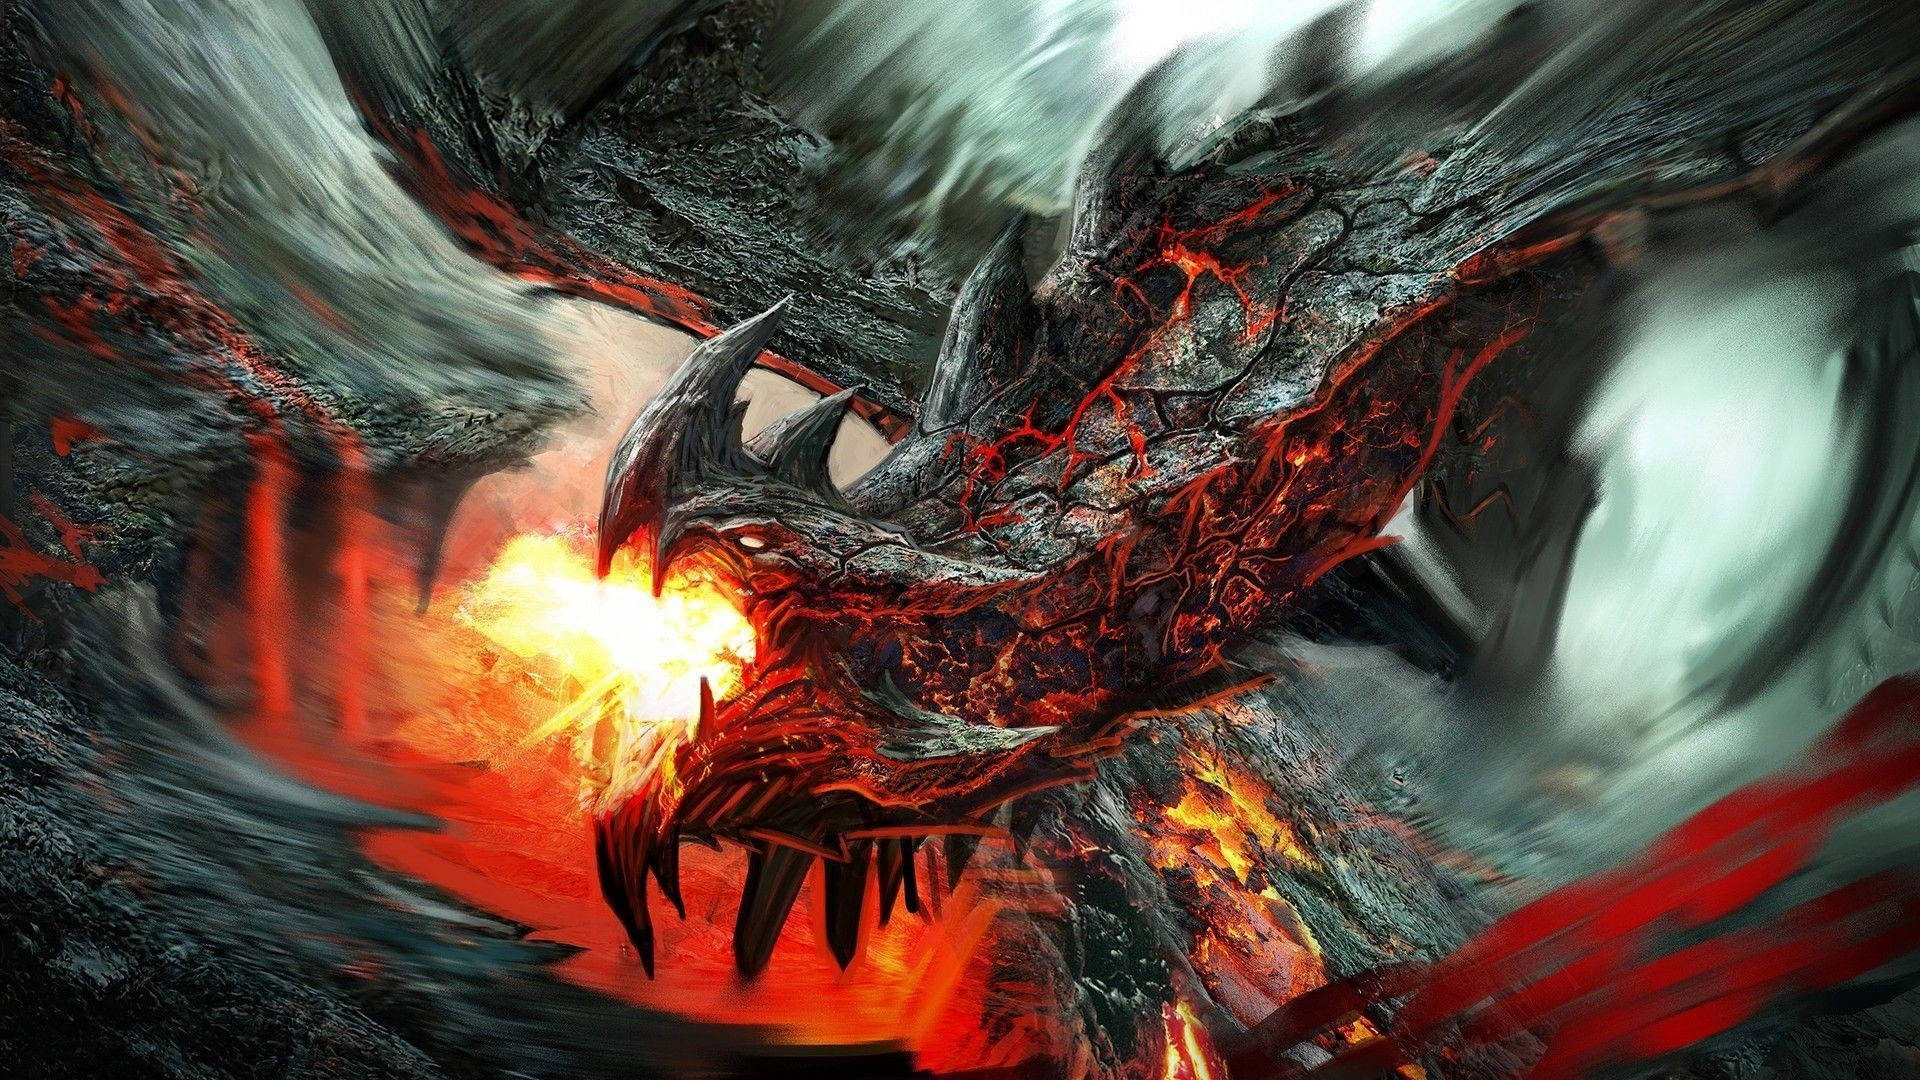 Hd Dragon Fire Breath Wallpaper